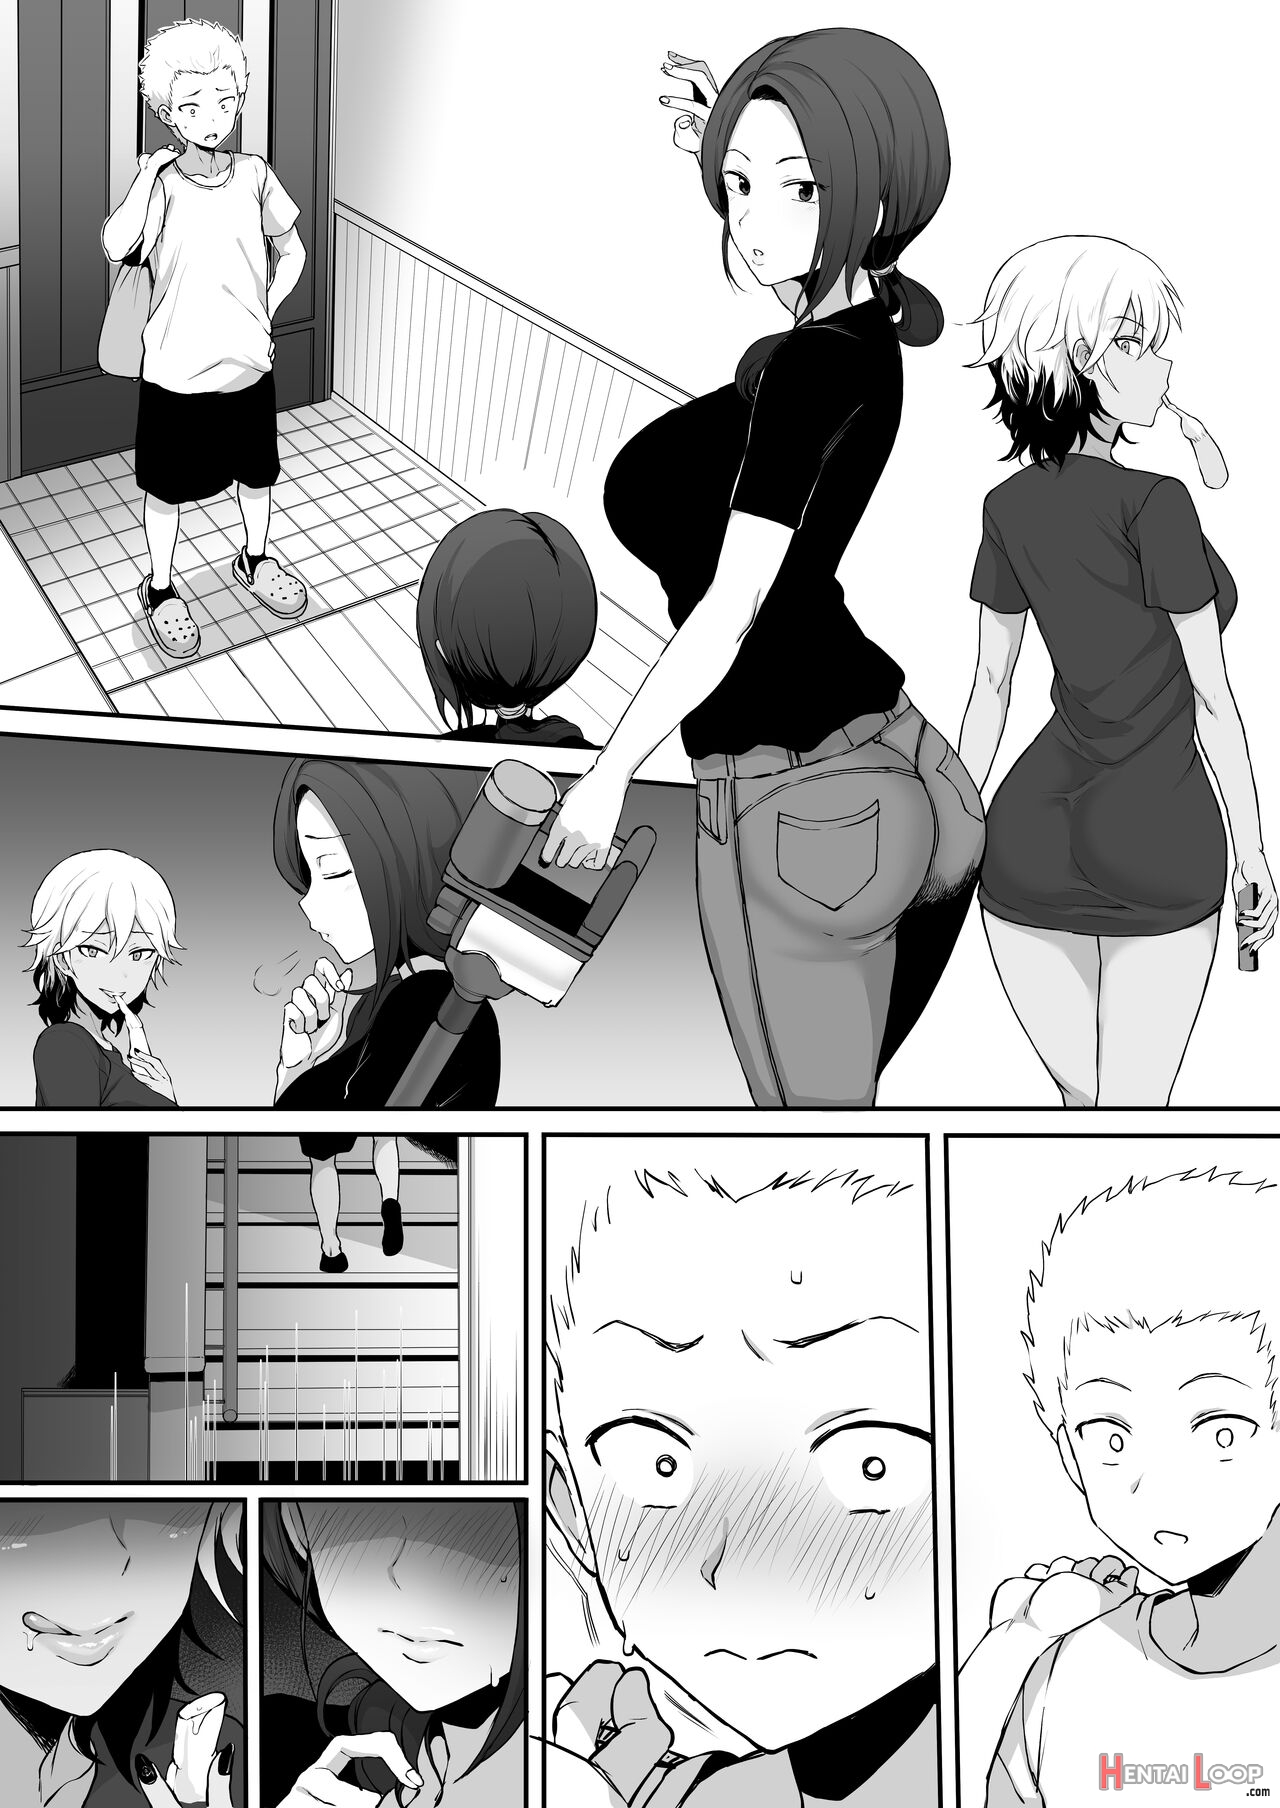 Kokujin No Tenkousei Ntr Ru Chapters 1-6 Part 1 Plus Bonus Chapter: Stolen Mother’s Breasts page 36